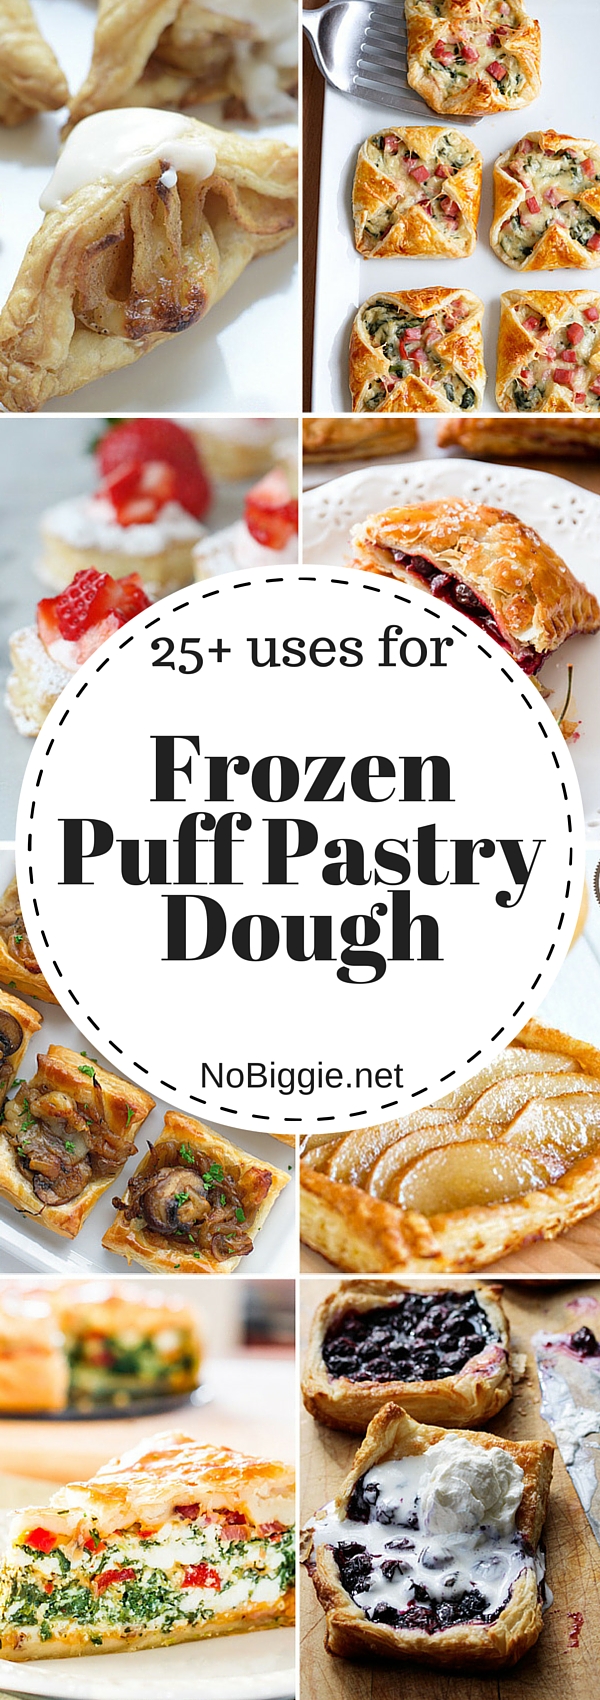 25+ Uses for Frozen Puff Pastry Dough | NoBiggie.net